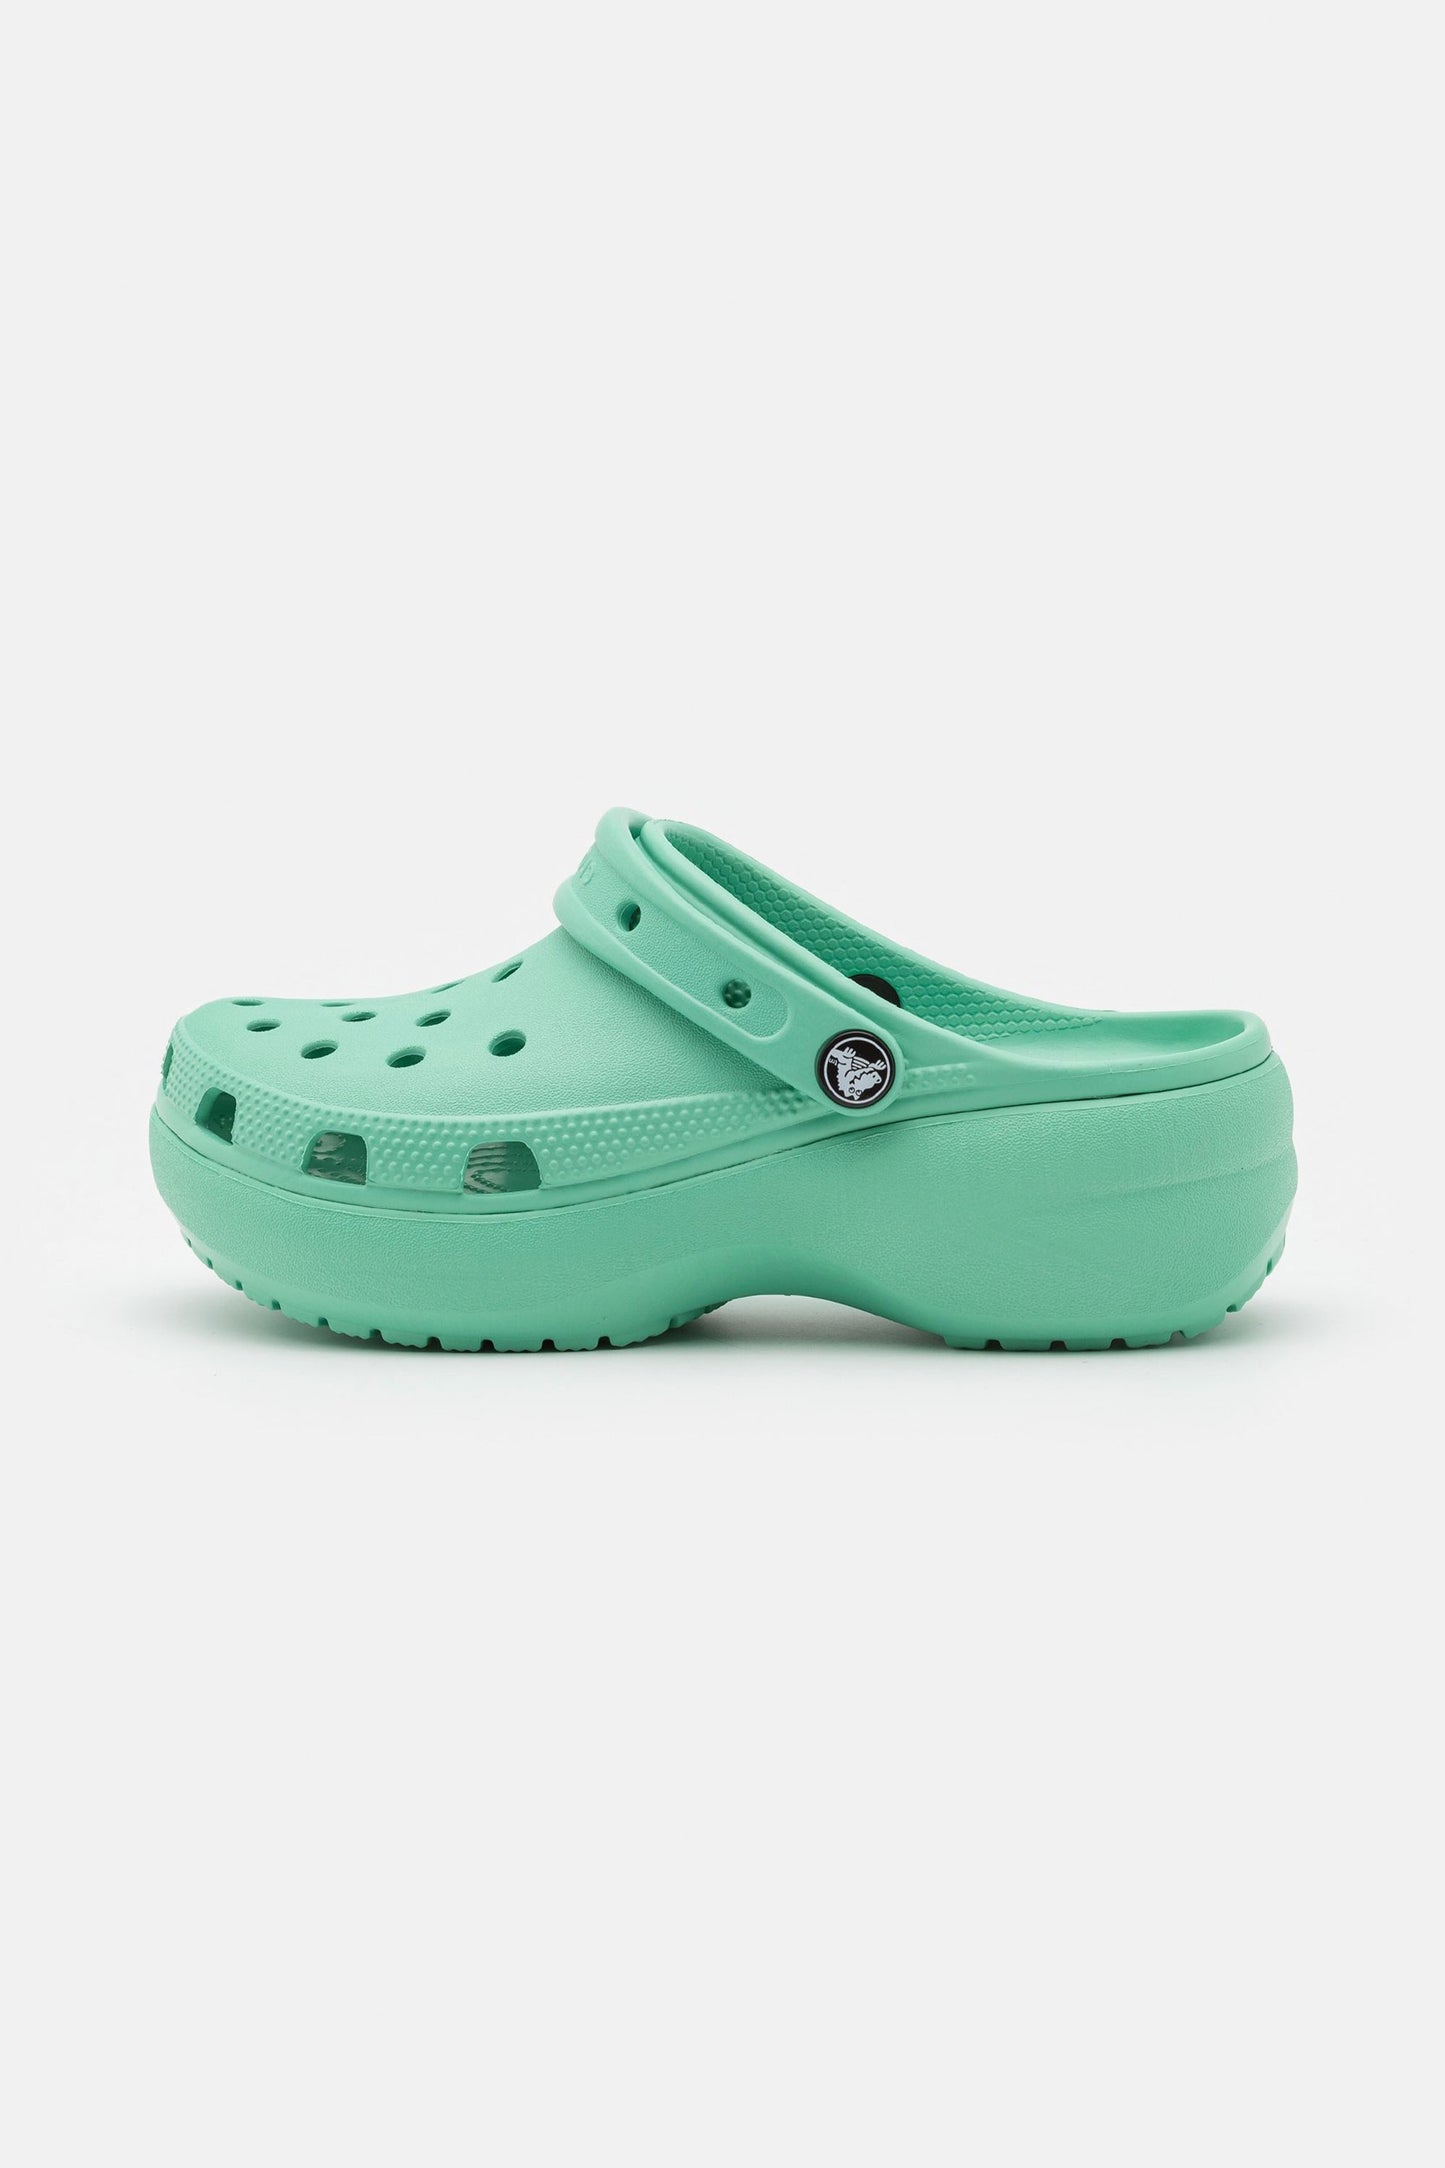 Pukas-Surf-Shop-crocs-footwear-classic-platform